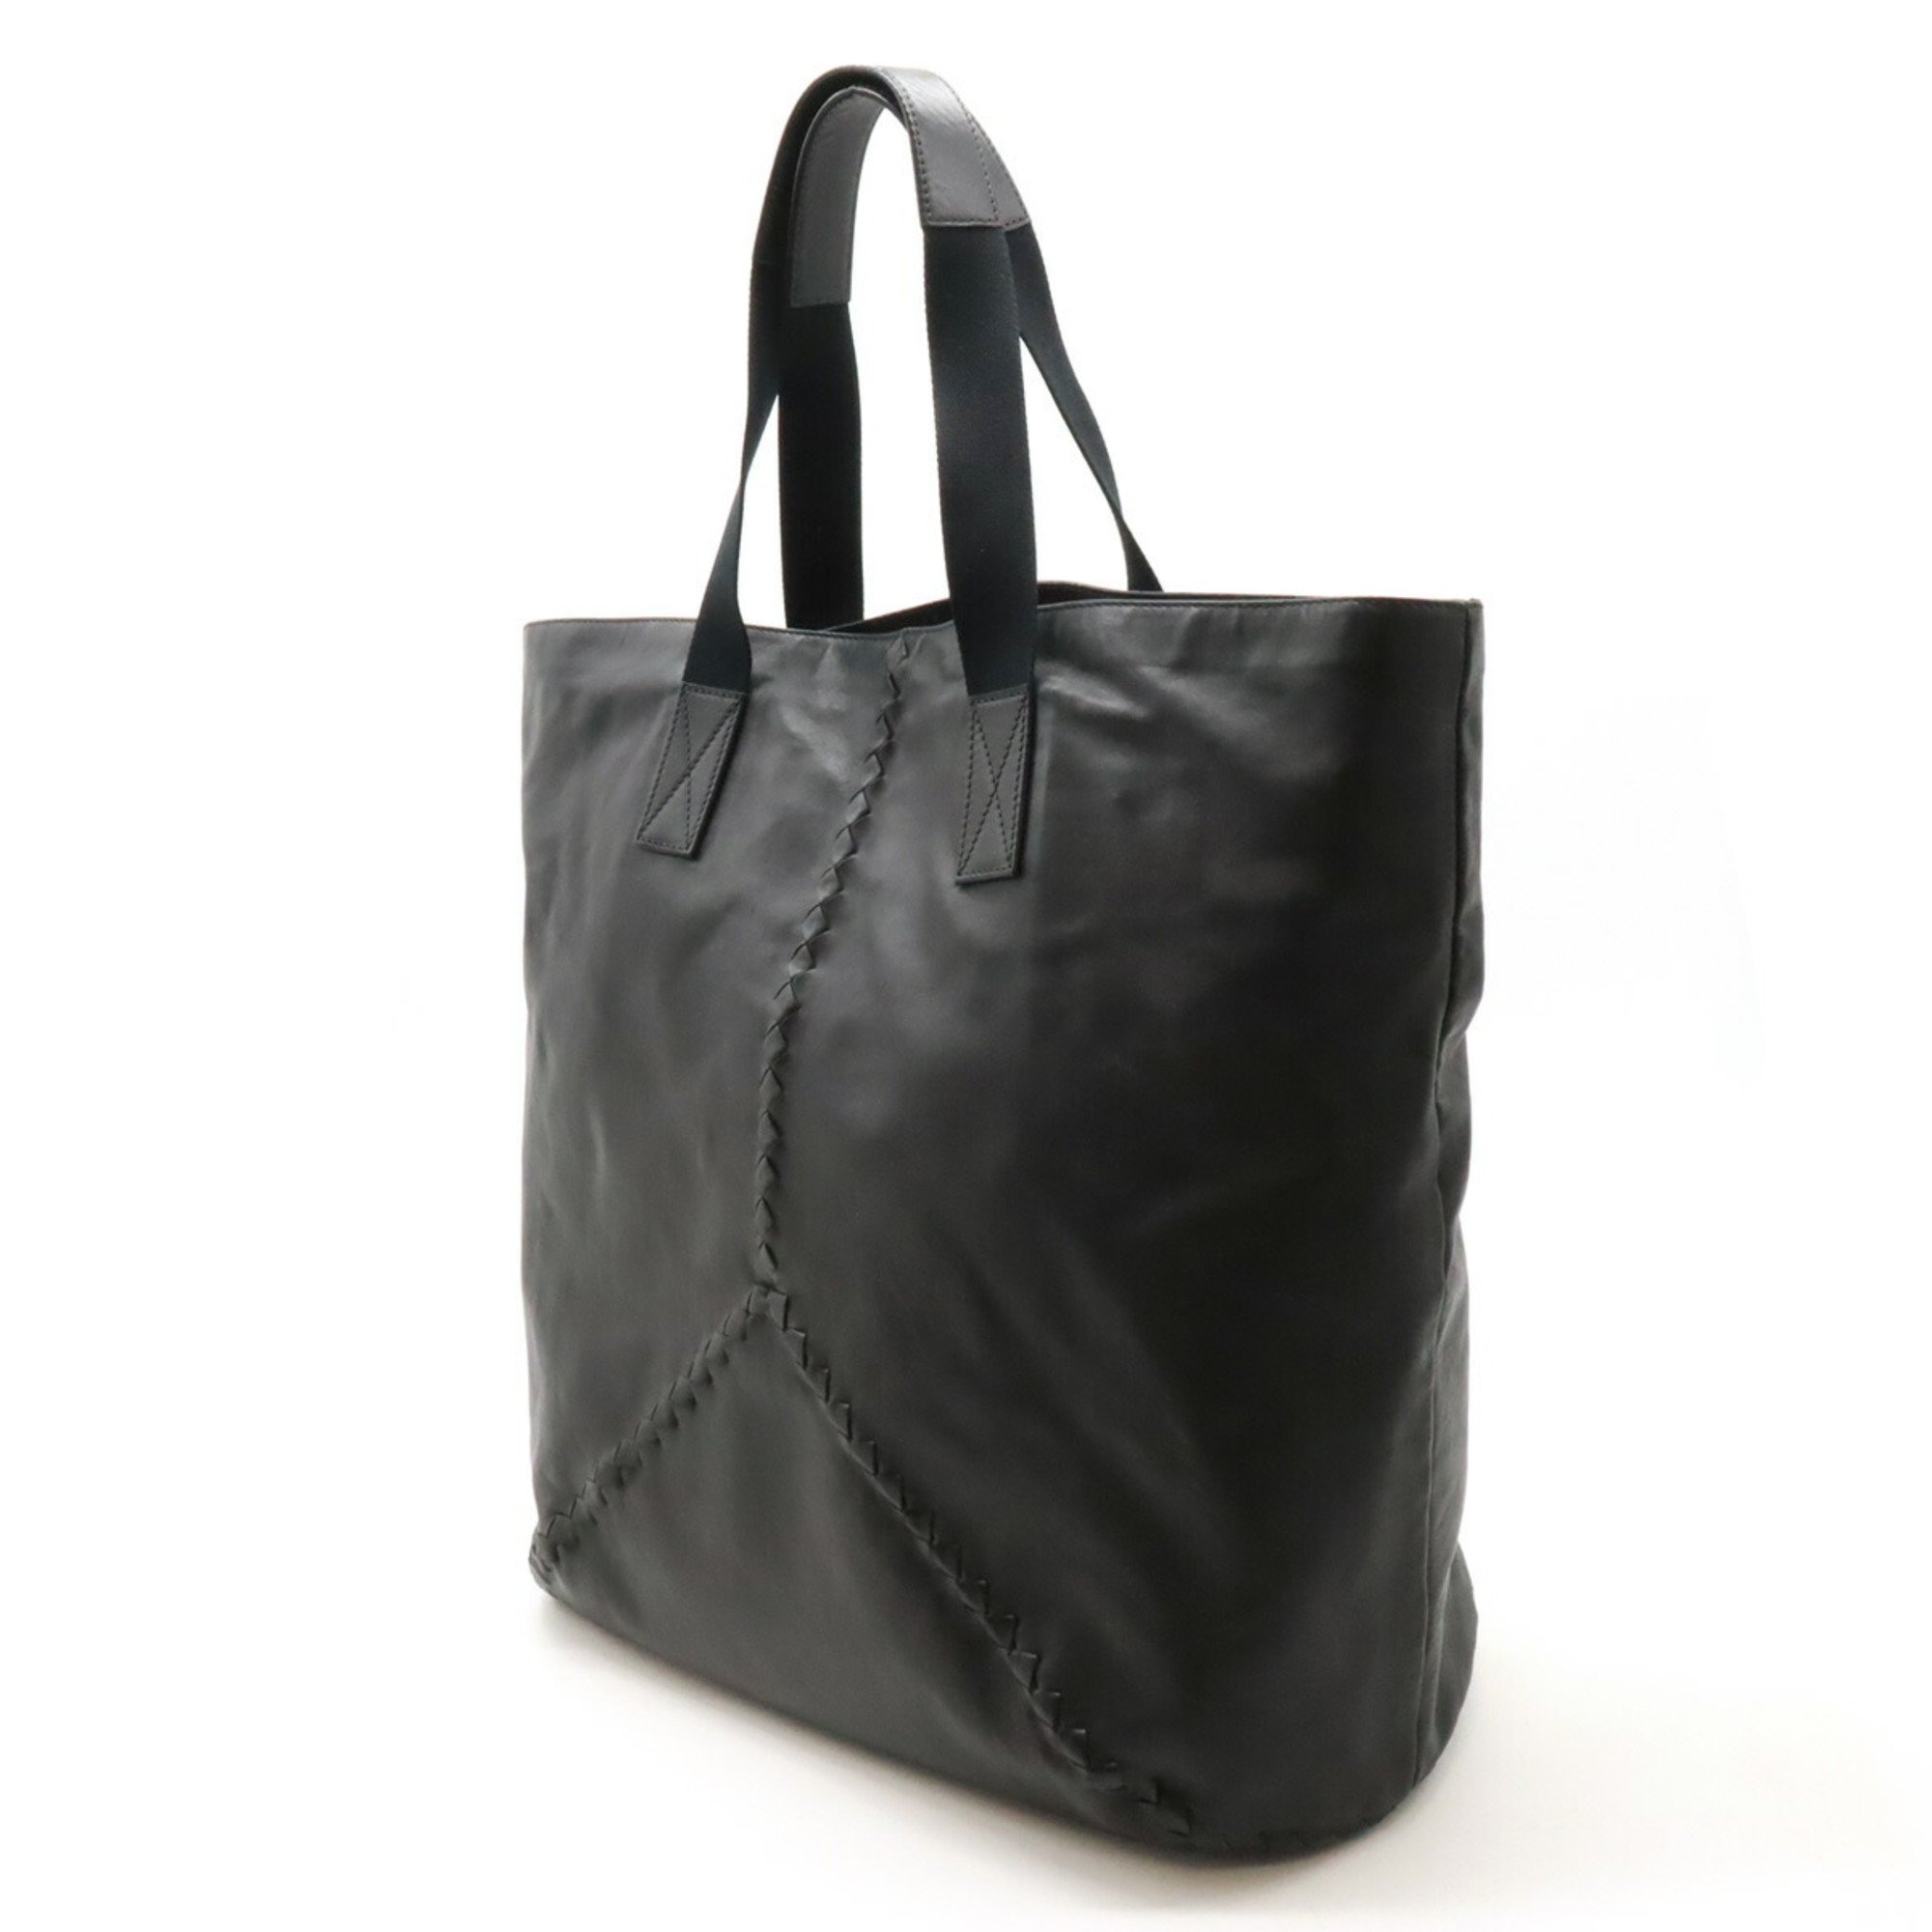 BOTTEGA VENETA Bottega Veneta Tote Bag Shoulder Leather Black 234540